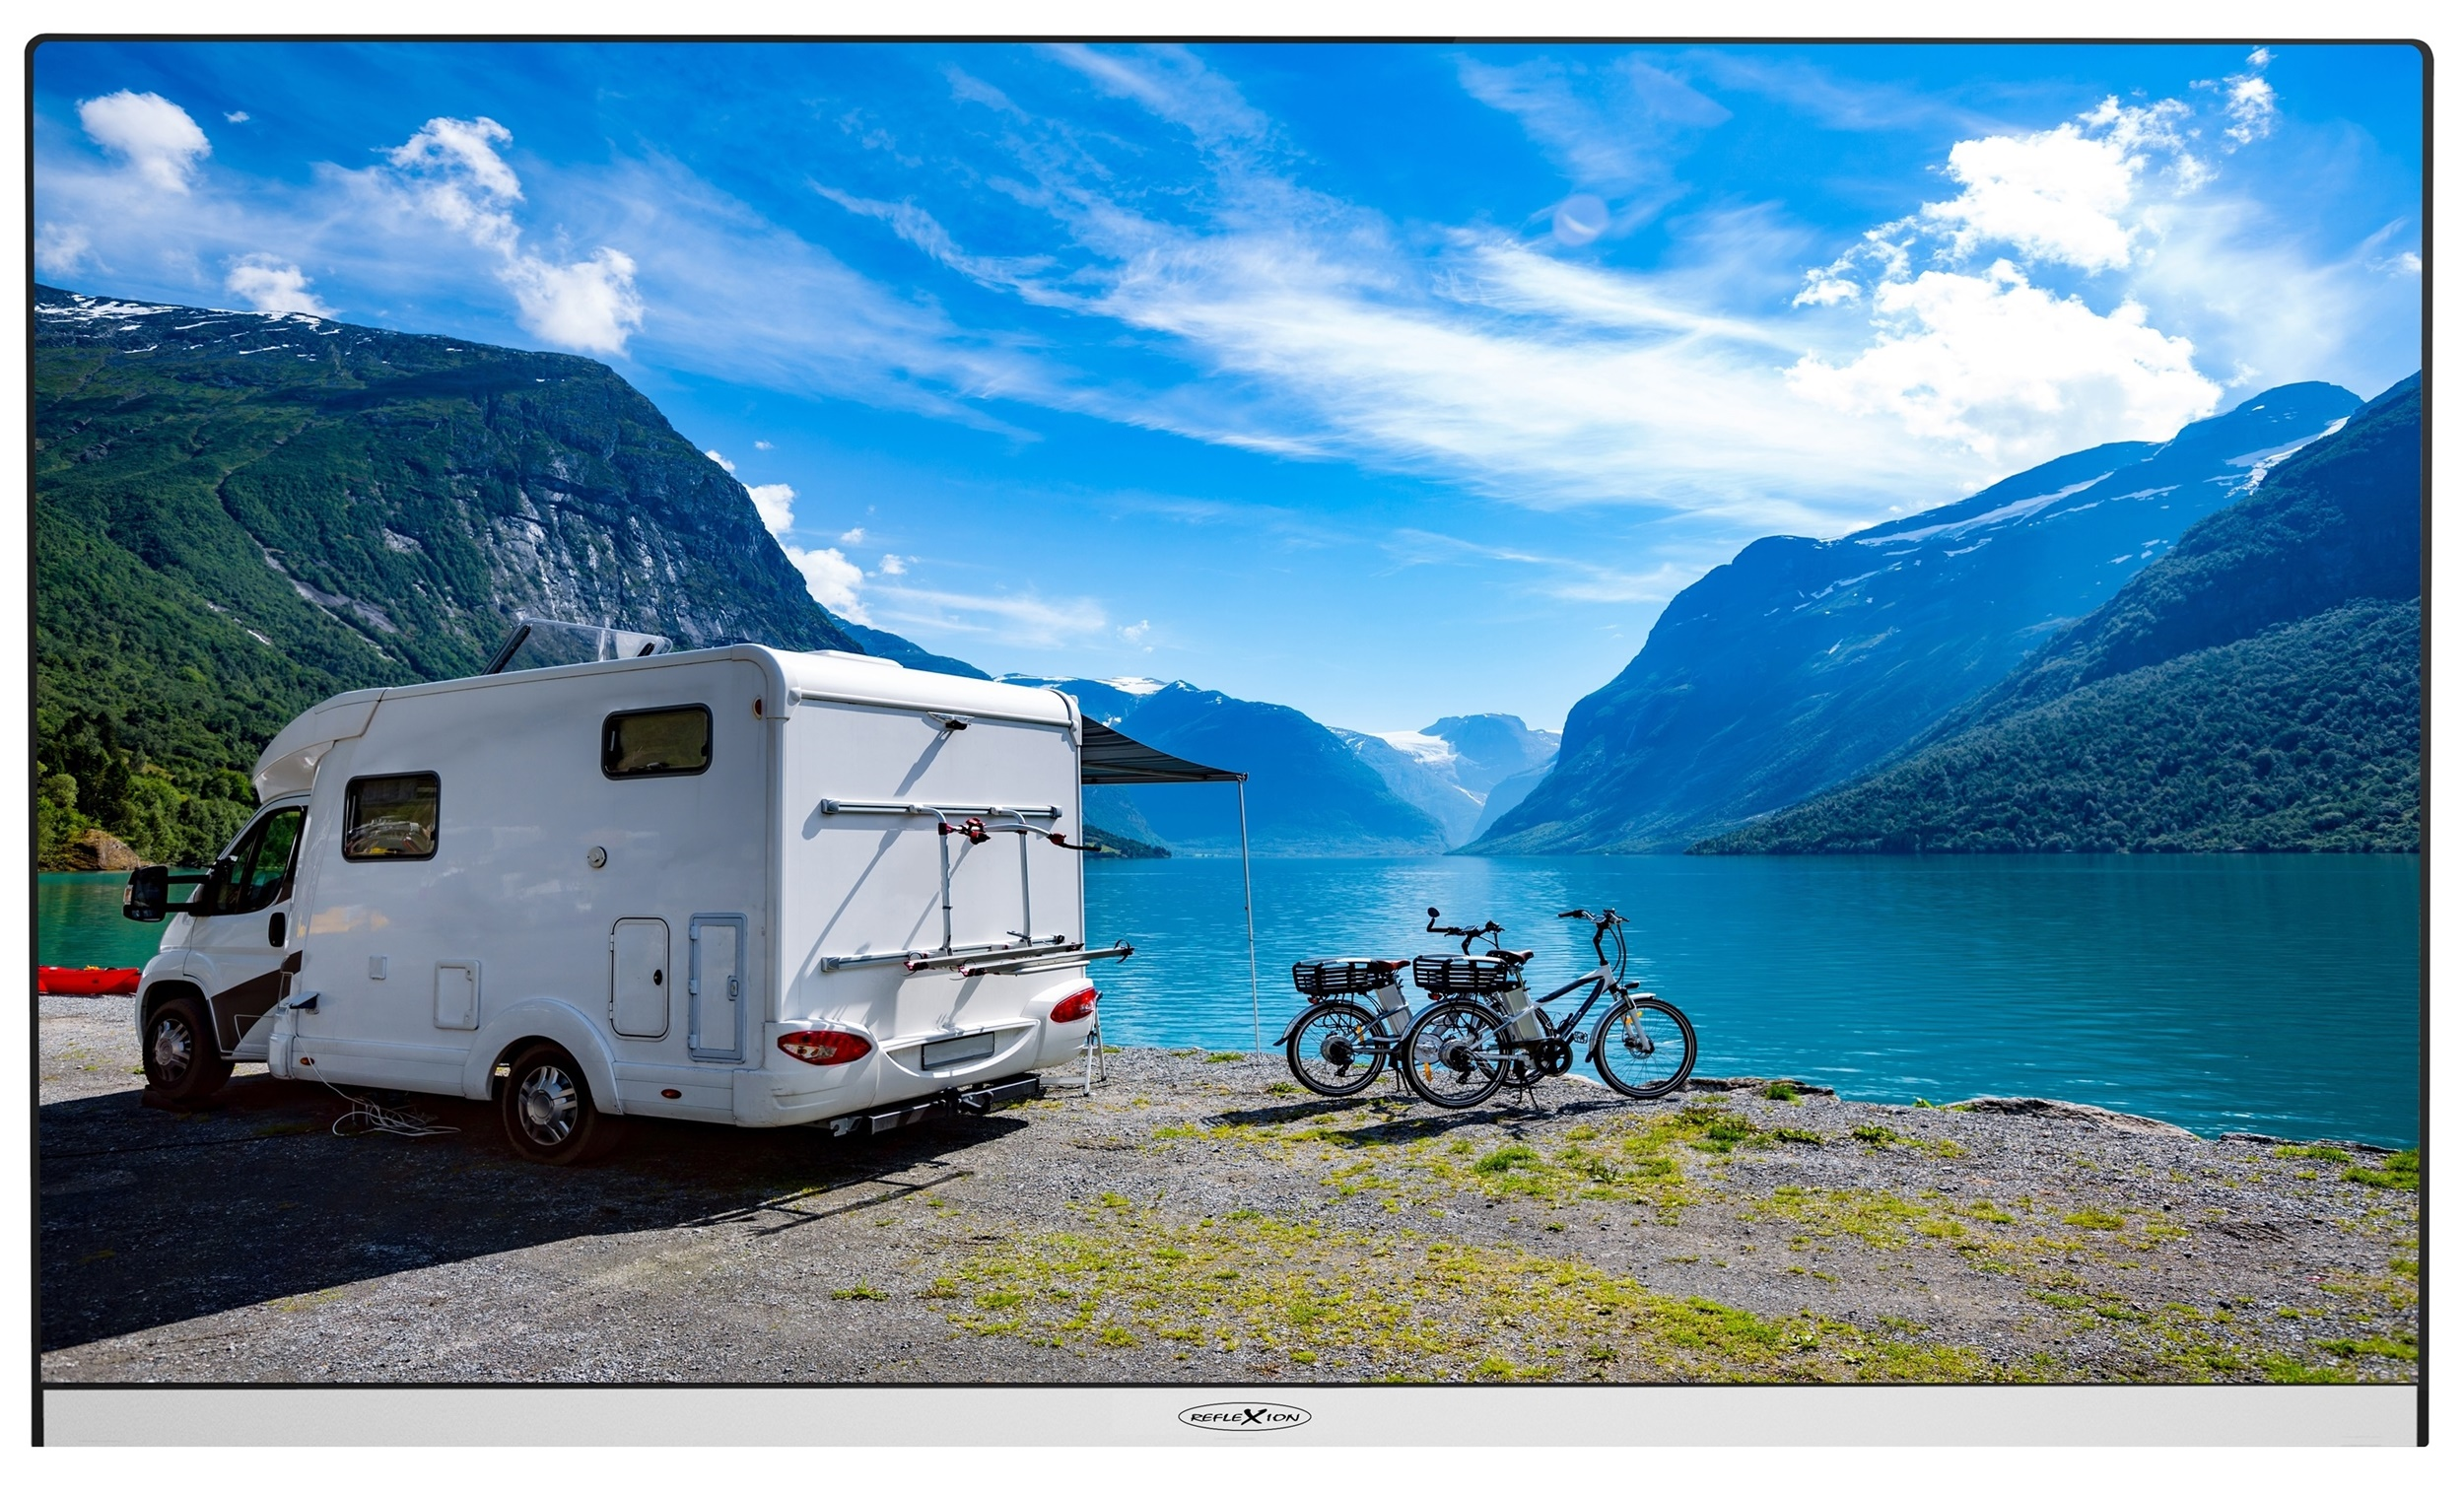 60 SMART LEDX22i+ 24 TV / (Flat, LED TV) Zoll cm, Full-HD, REFLEXION